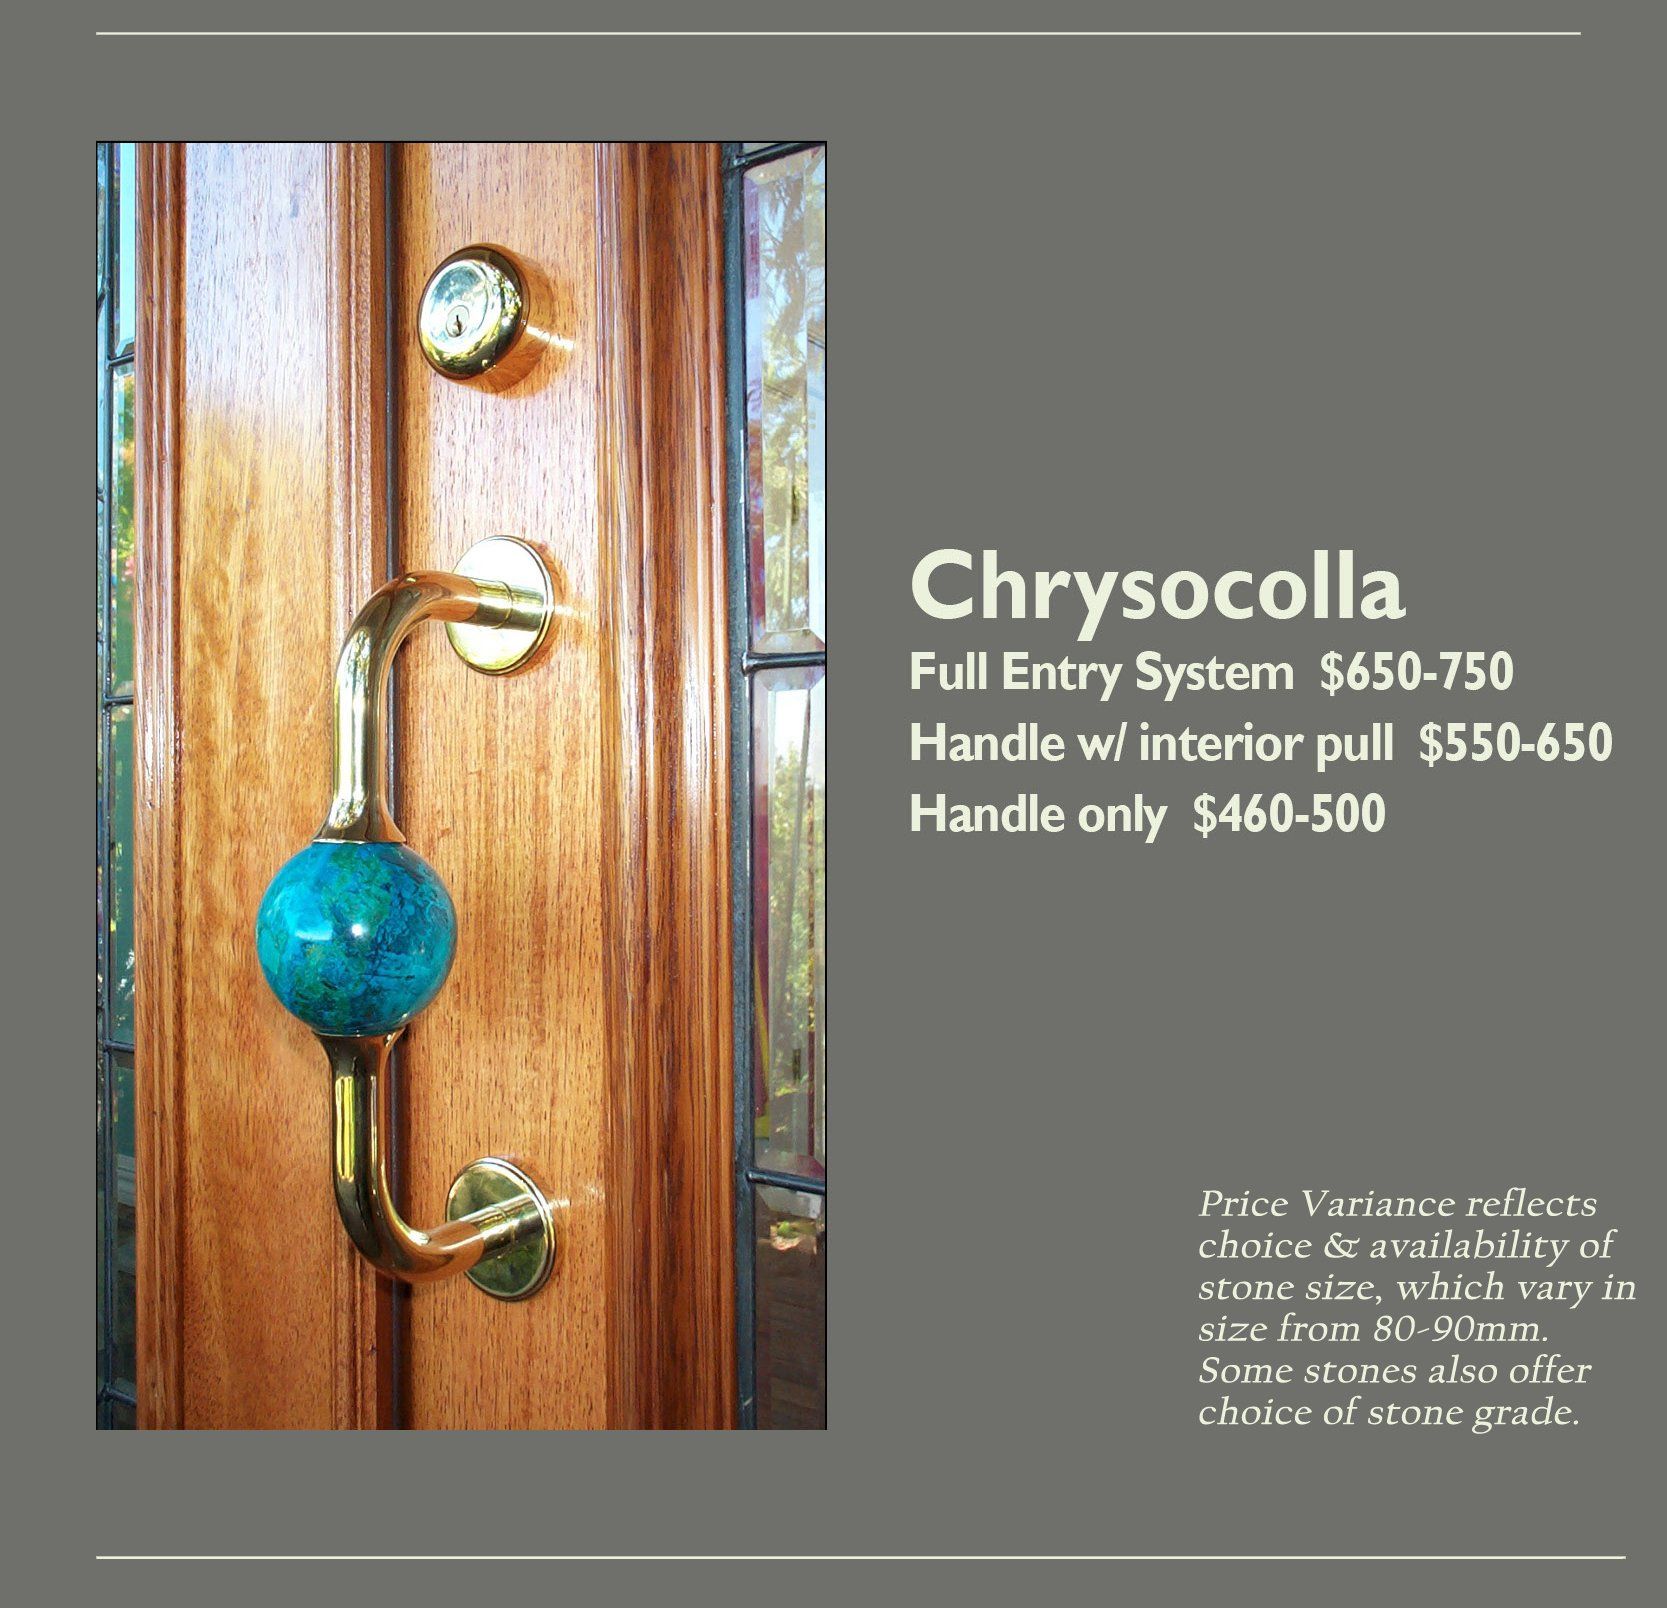 Chrysocolla Entry Knob Options